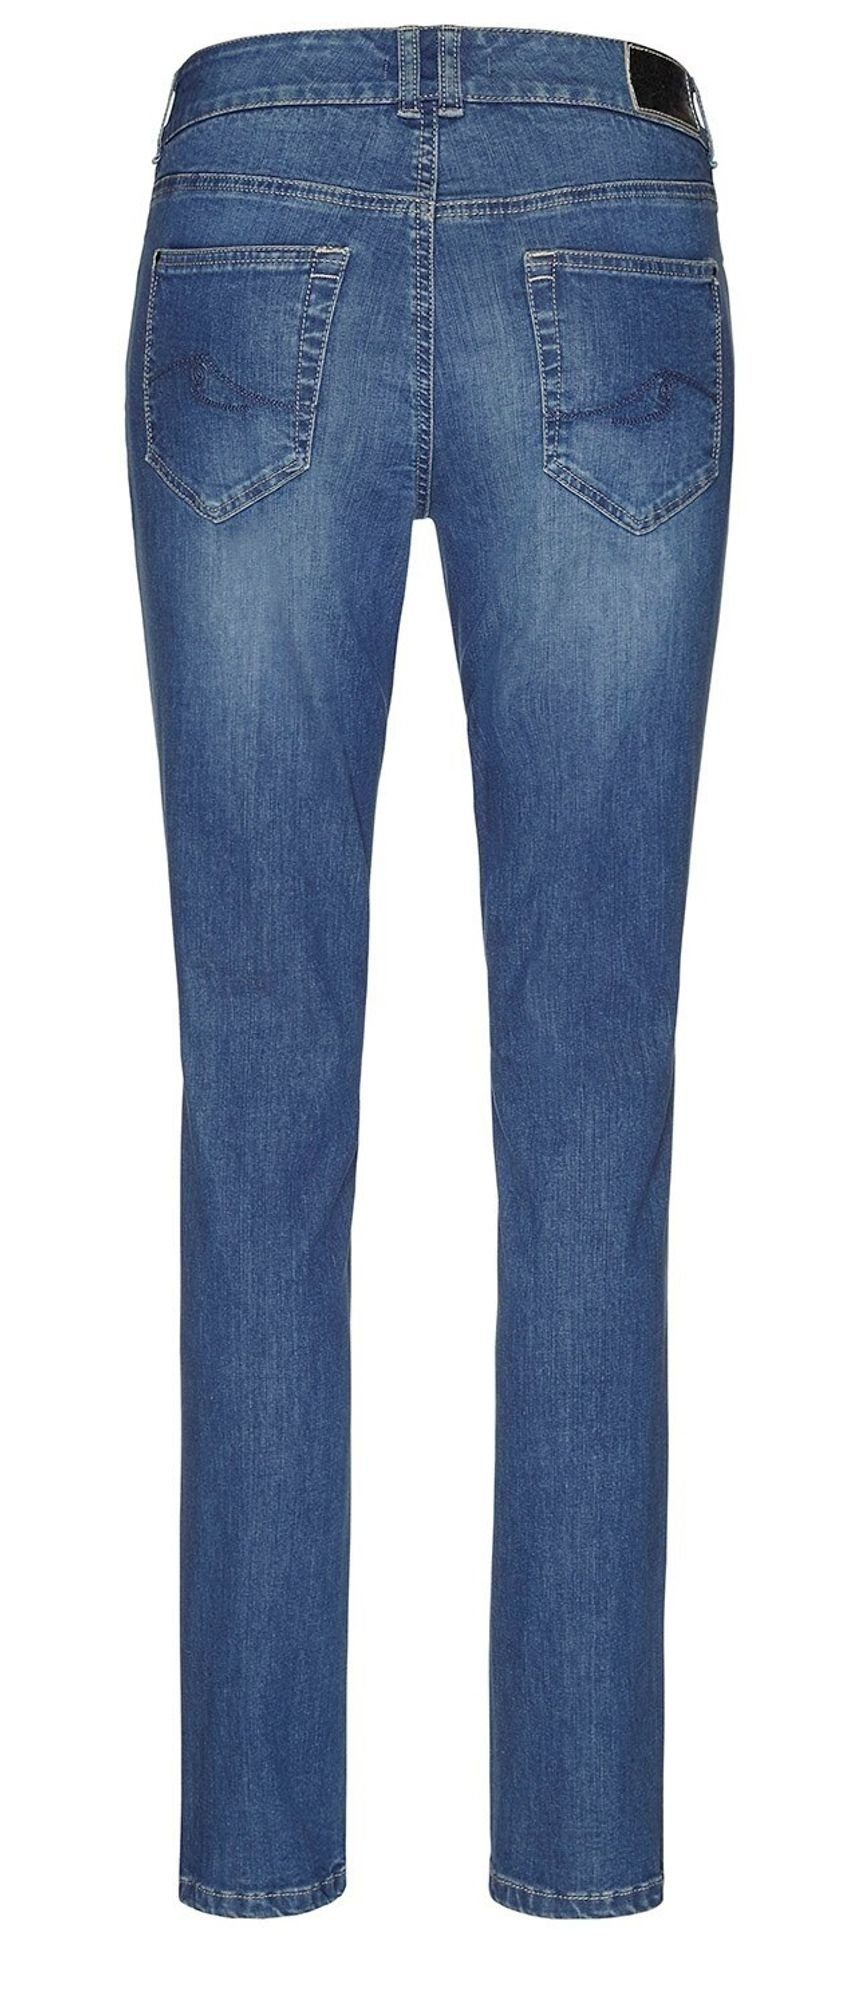 Atelier GARDEUR 5-Pocket-Jeans bleach 601021